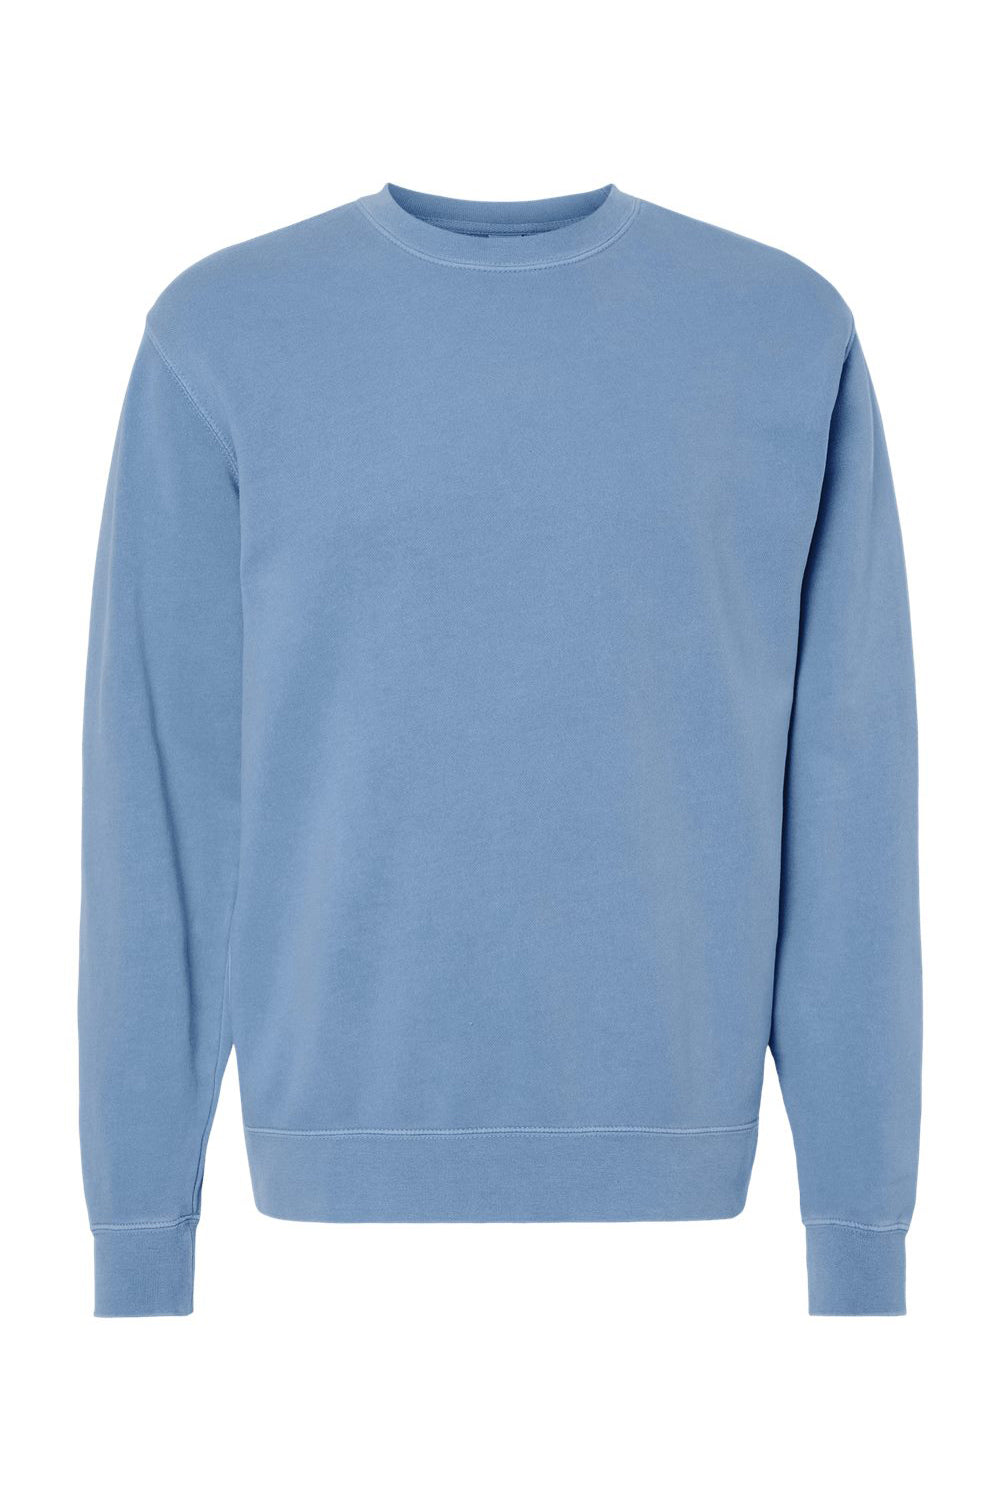 Independent Trading Co. PRM3500 Mens Pigment Dyed Crewneck Sweatshirt Light Blue Flat Front